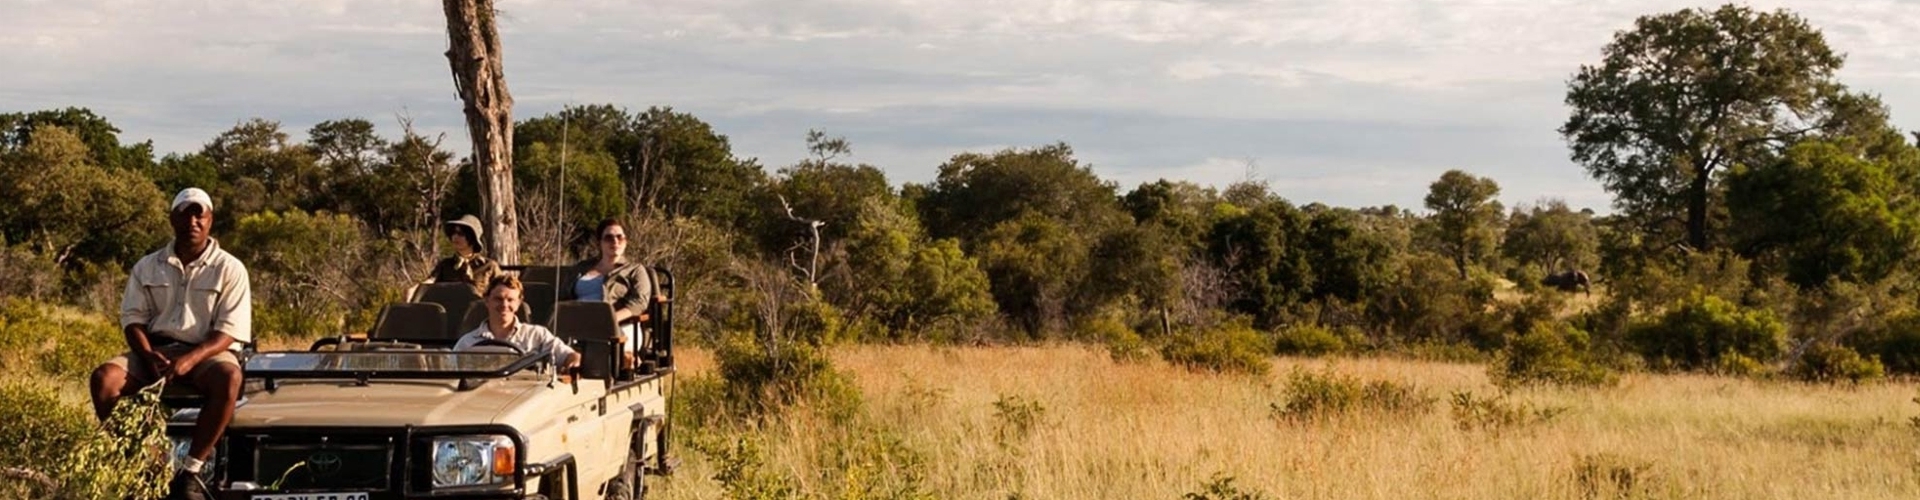 manyaleti-game-reserve-krugerpark-safari-zuid-afrika